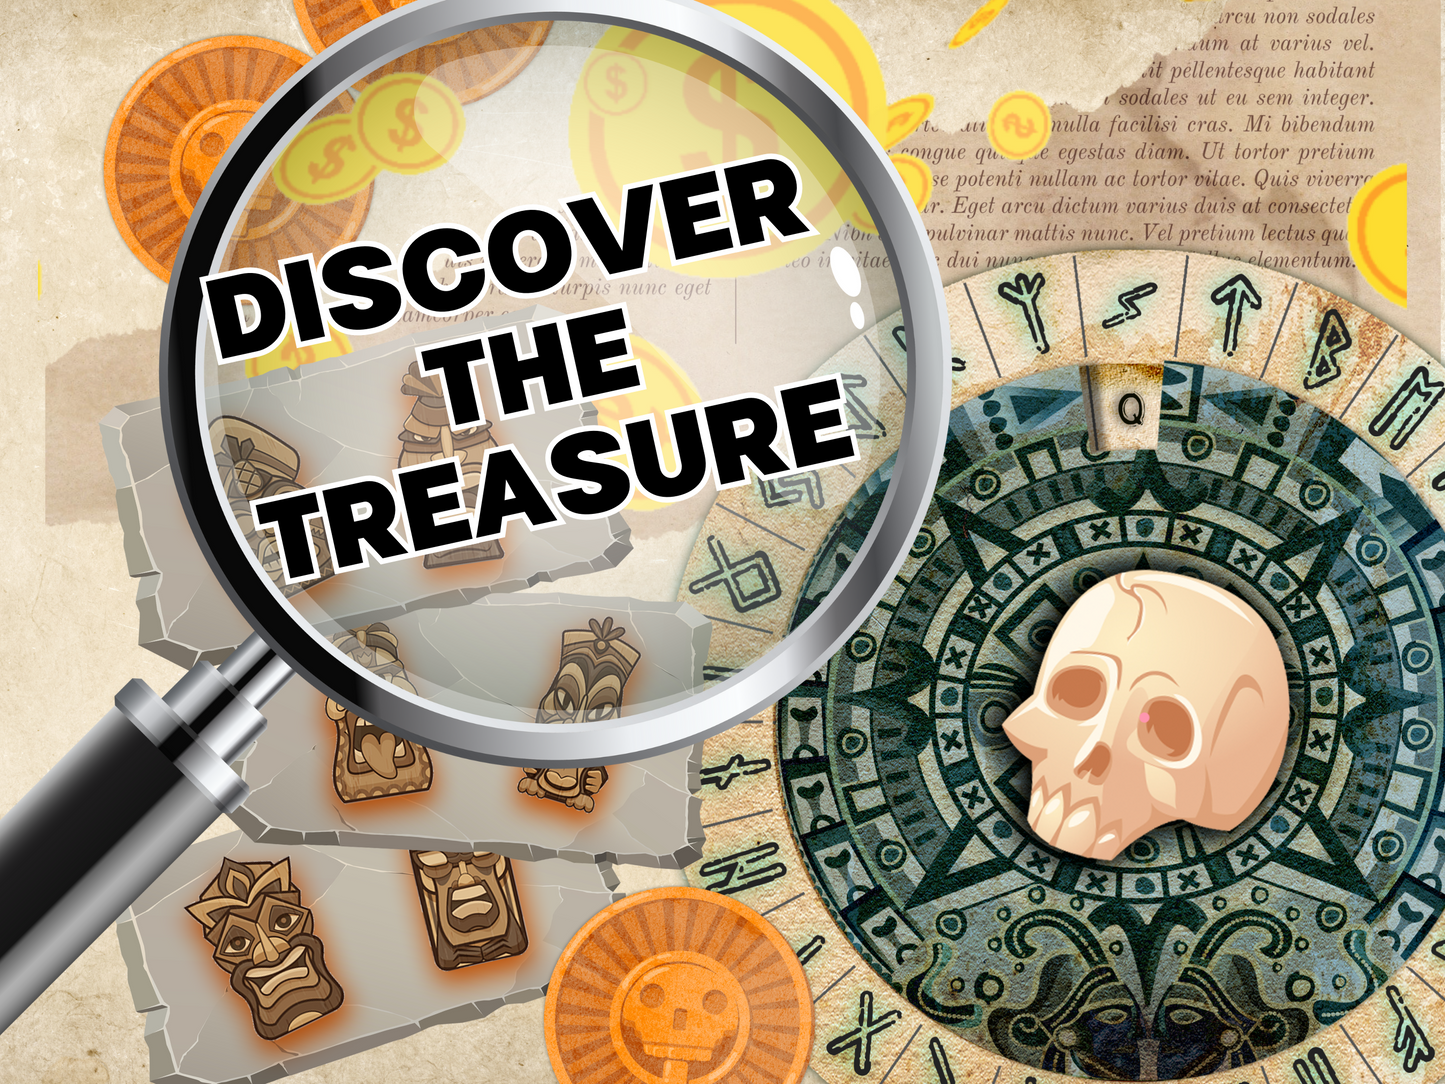 Indiana Jones Treasure Hunt